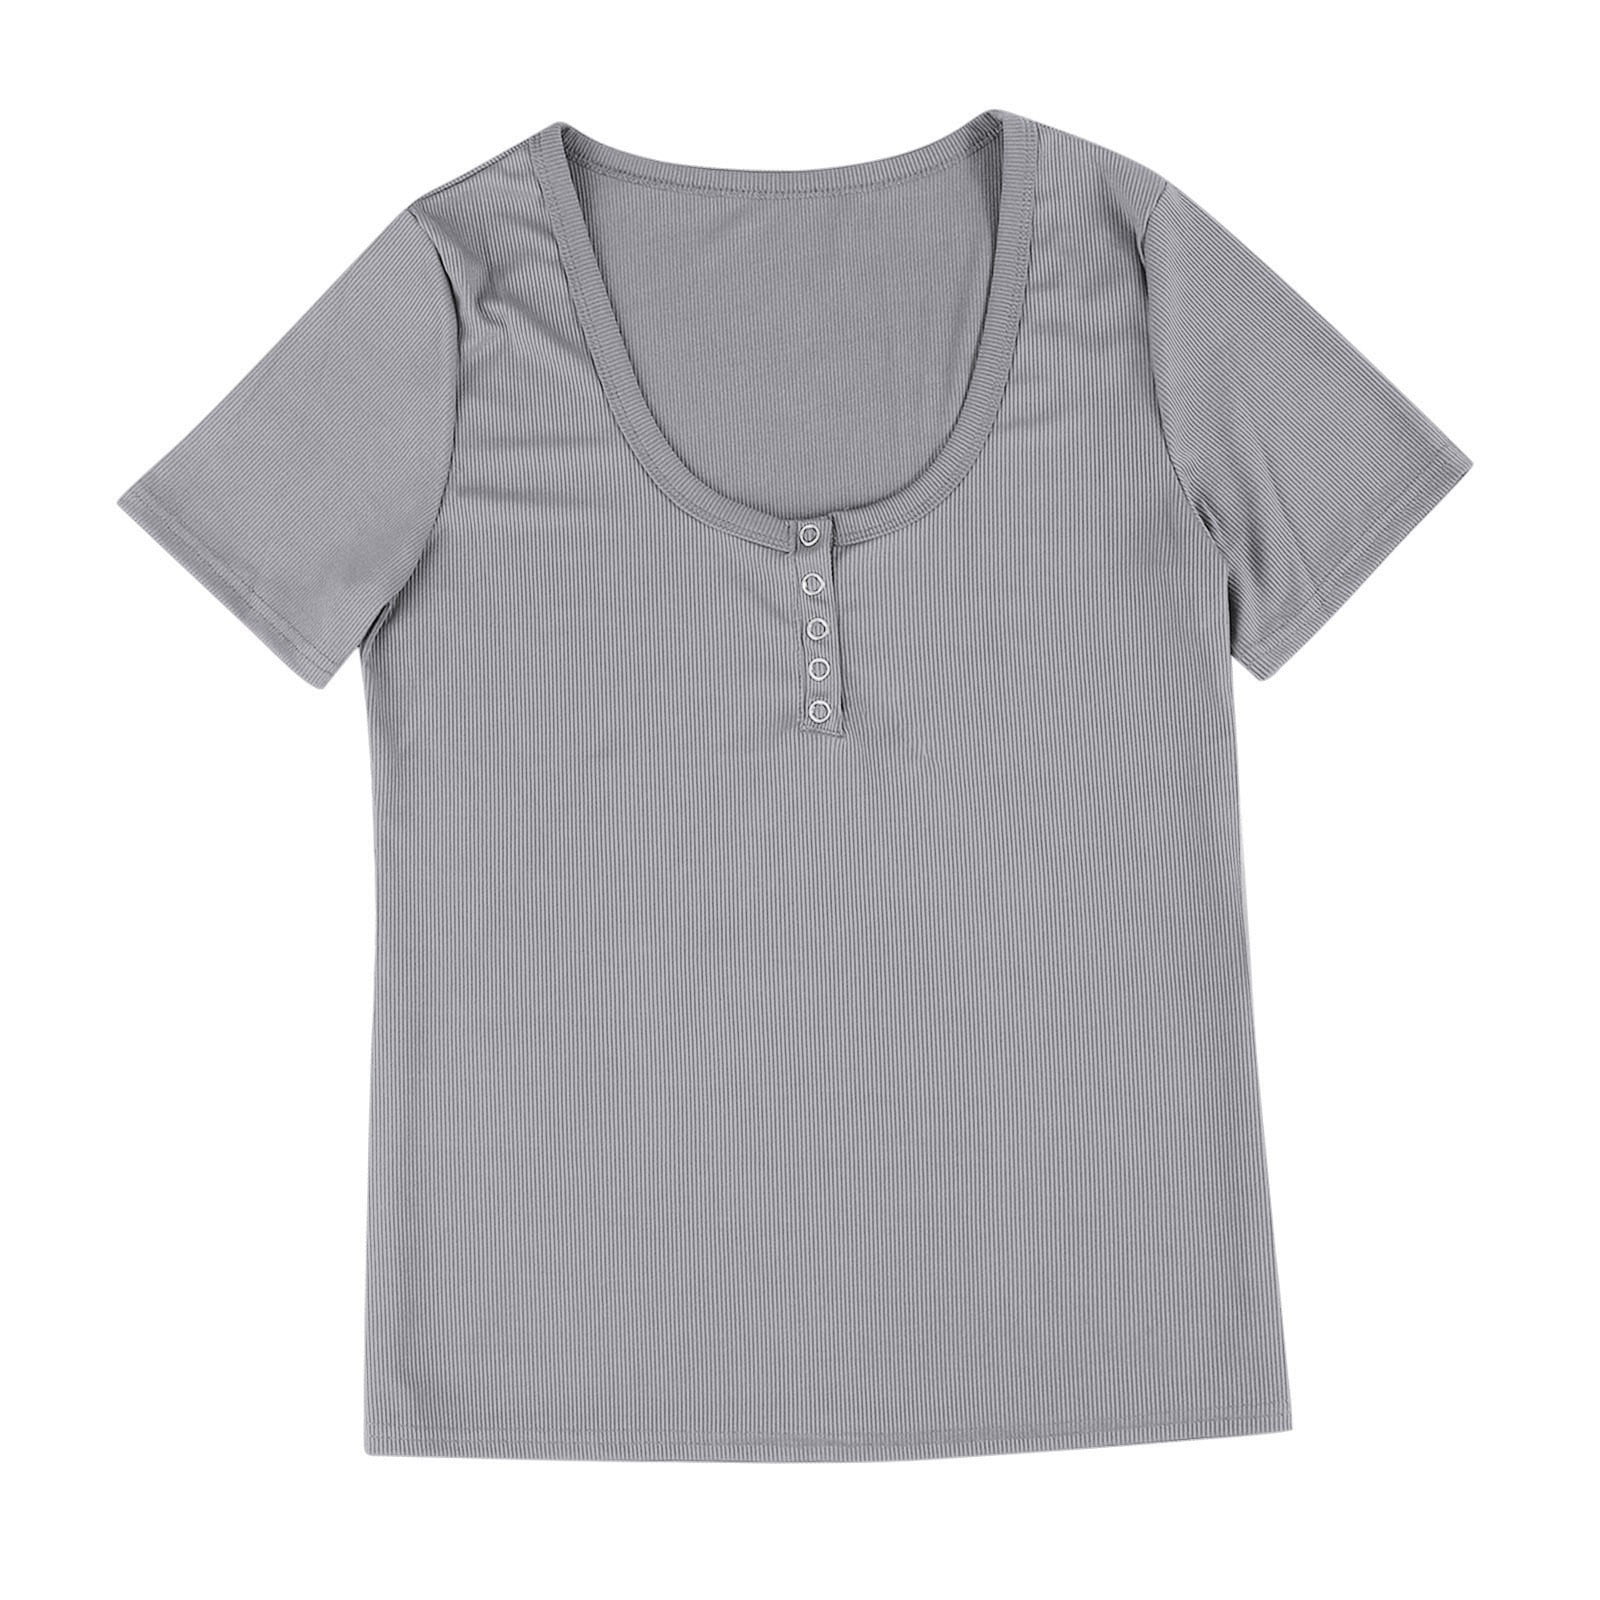 CieKen Women Basic Sexy Low Cut Button Down Tight Slim Fitted Tee Tops T  Shirts T-shirt for women